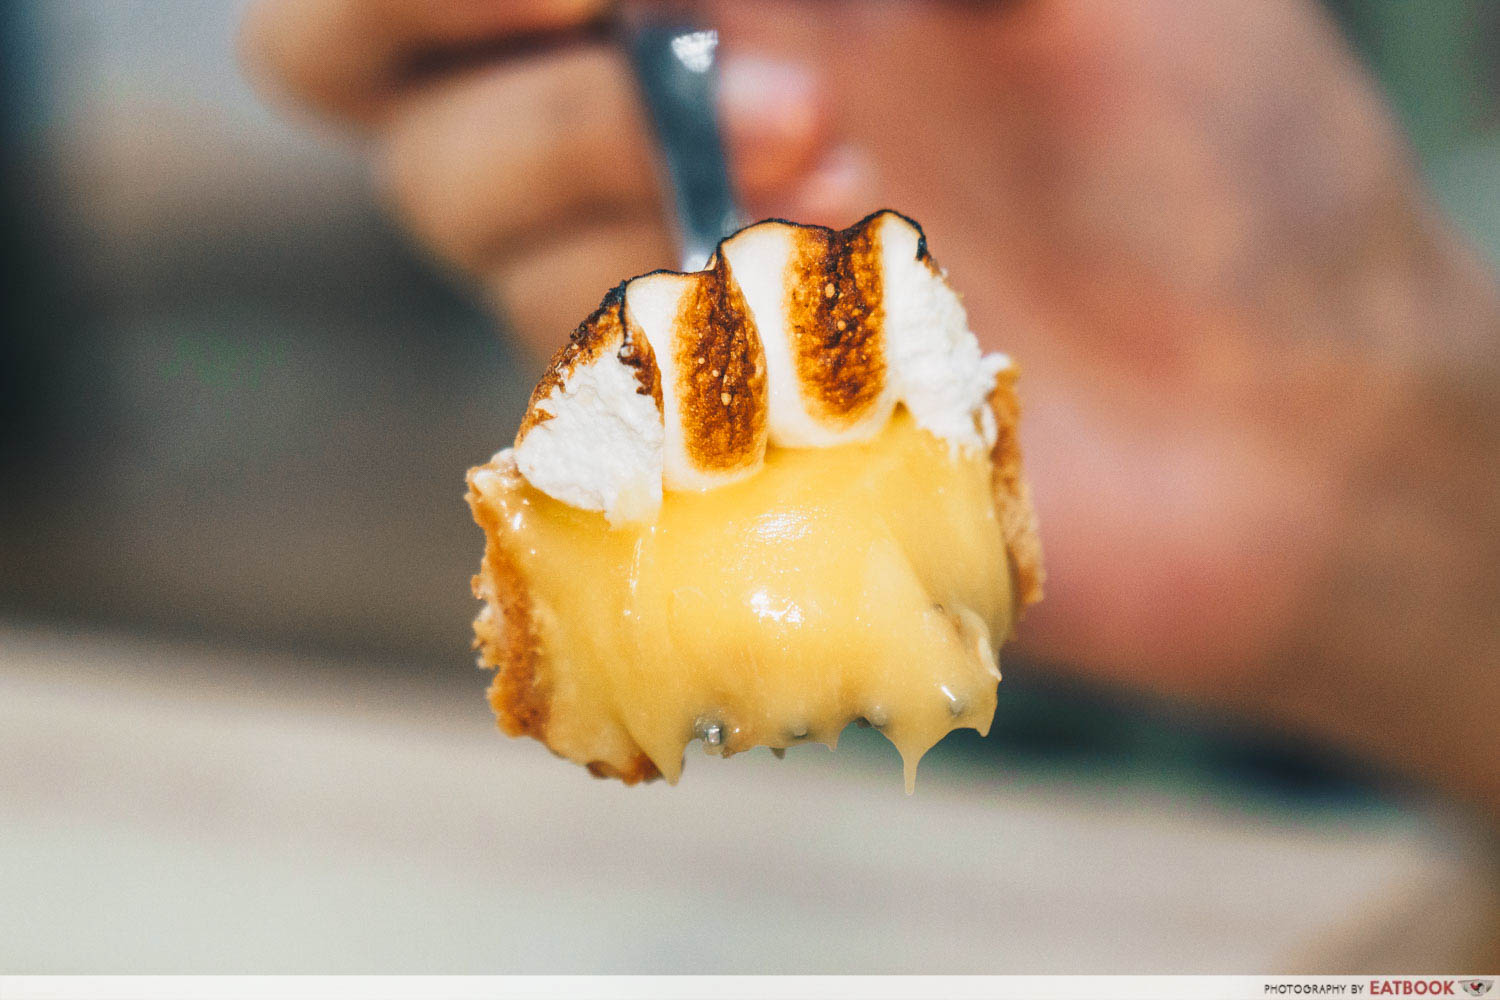 Dolc Patisserie - passionfruit meringue tart on fork